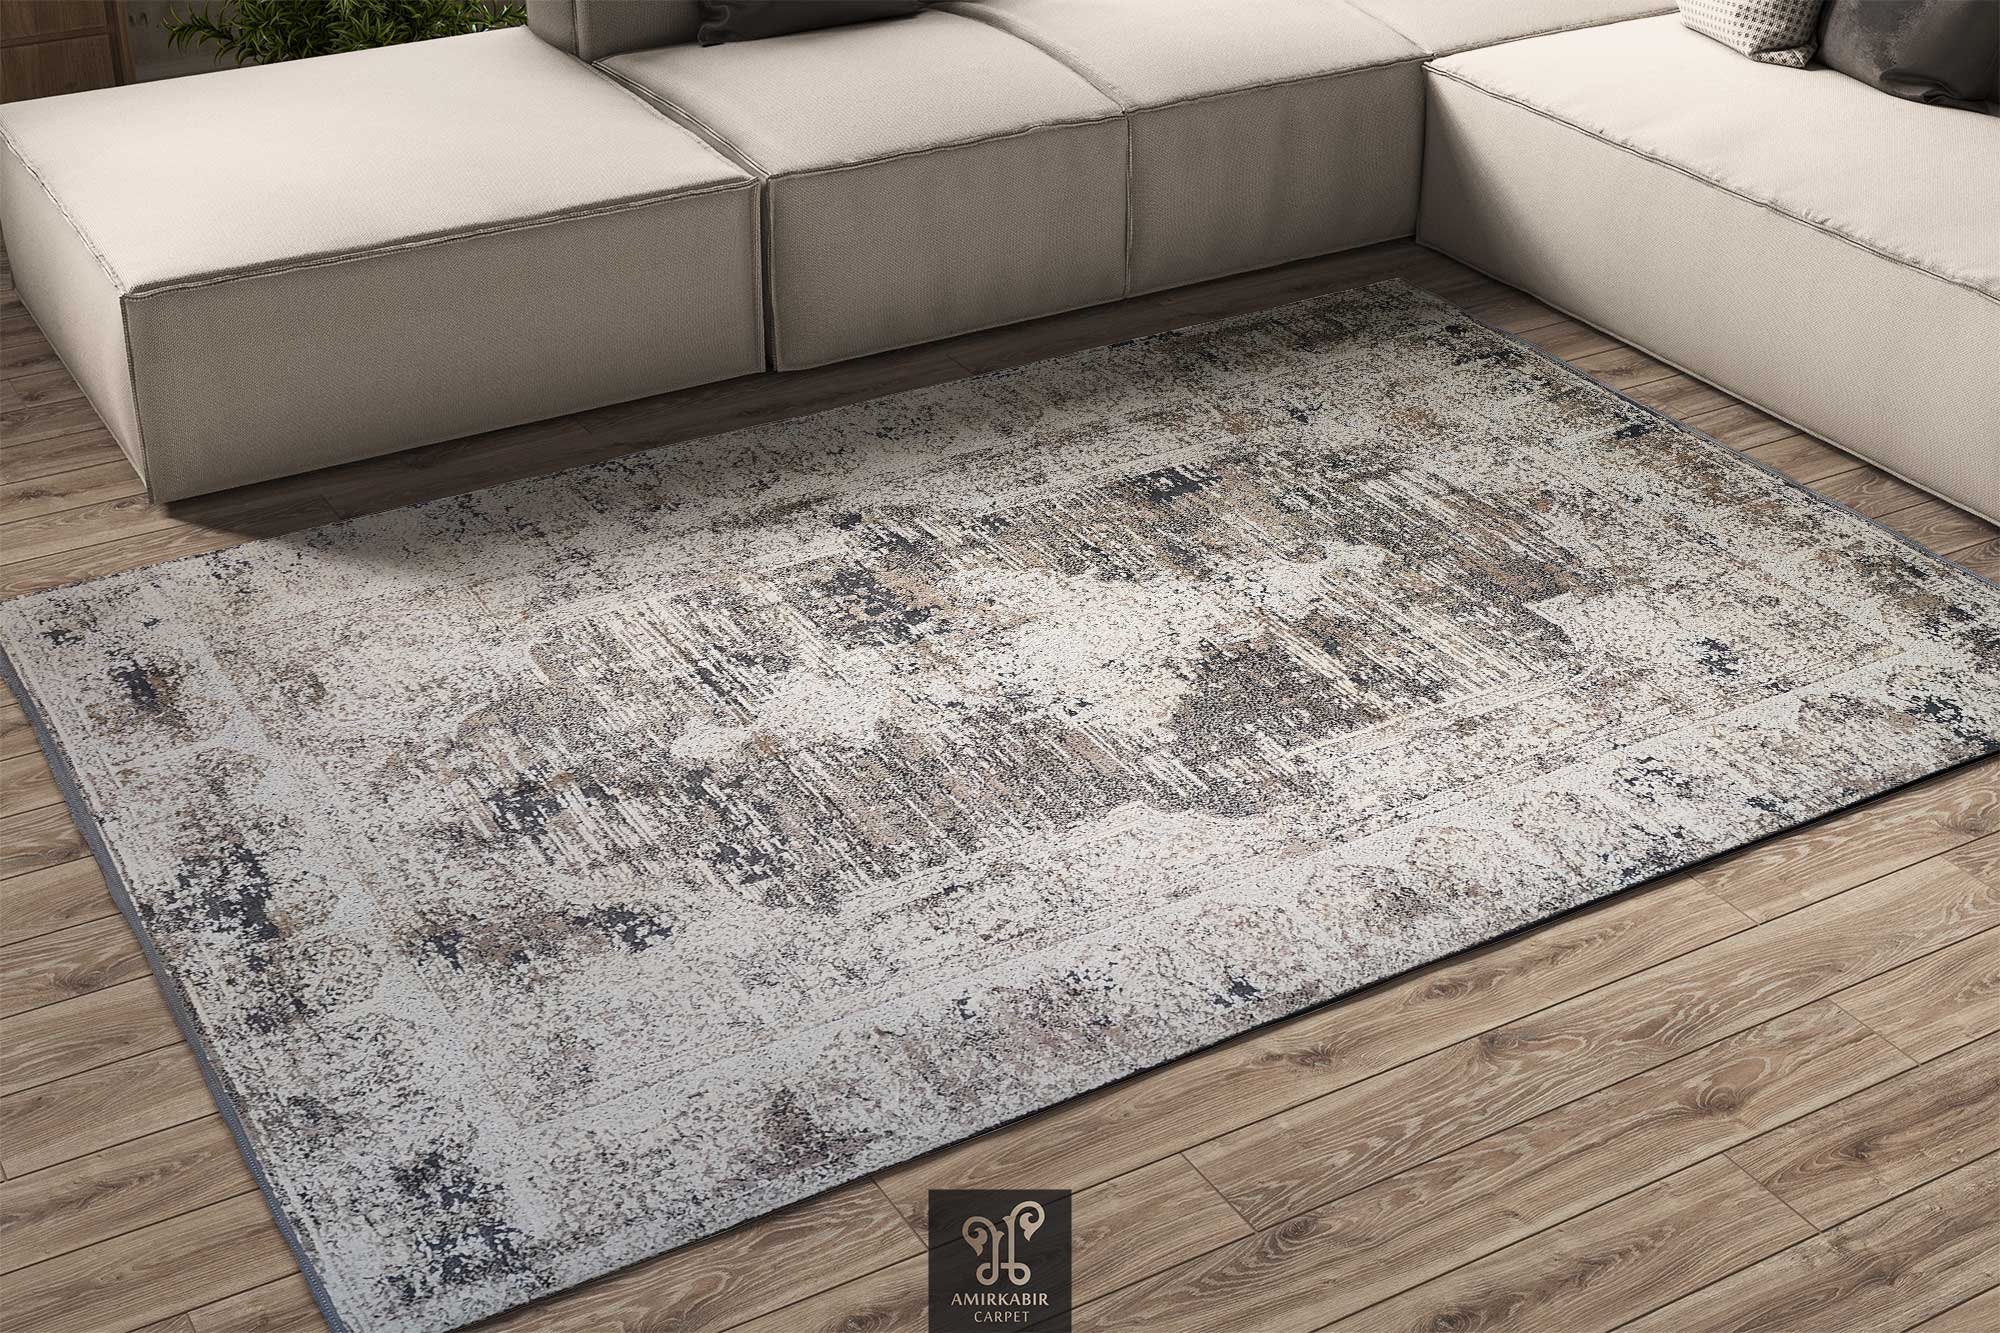 Vintage 400 reeds carpet -1400 Density RUG - Modern Carpet - Harmony Carpet 11102